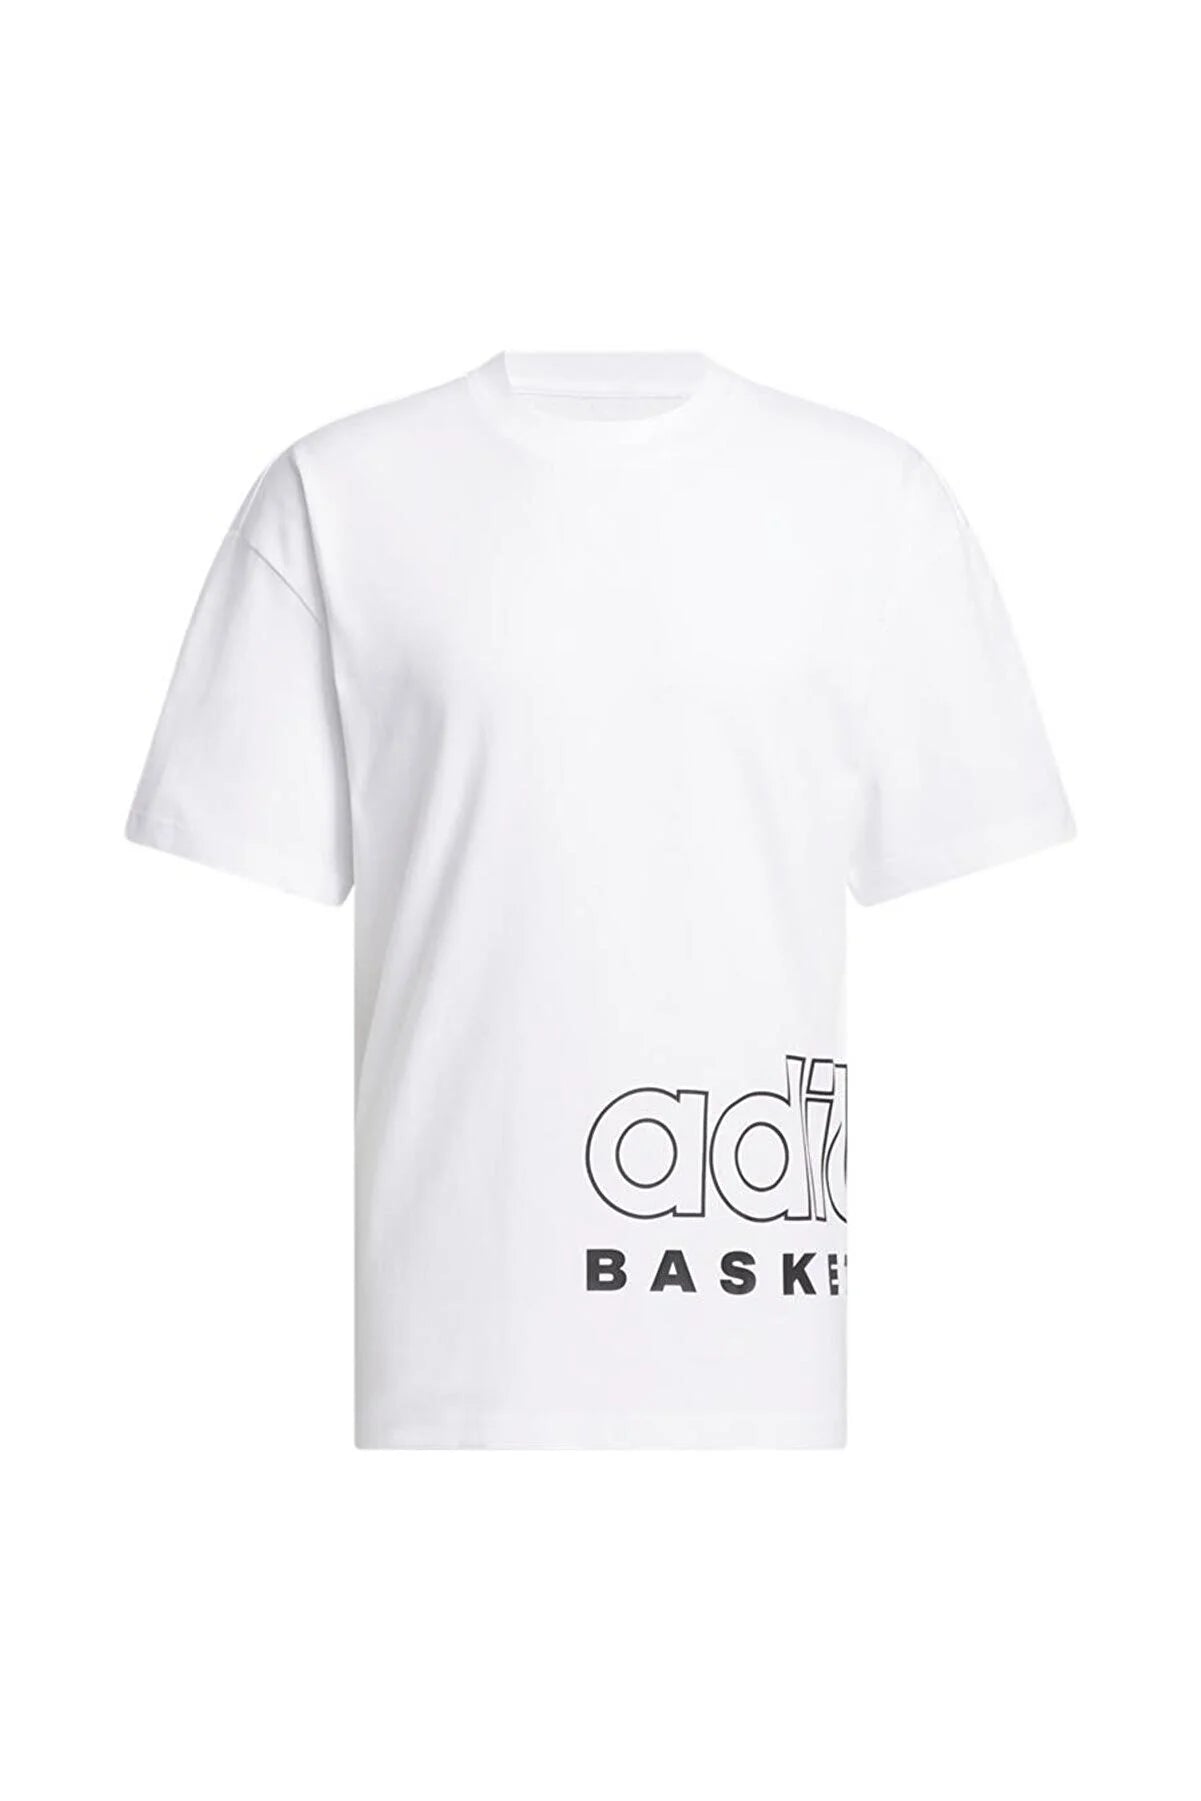 AA-X22 (Adidas basketball select tee white/black) 22492646